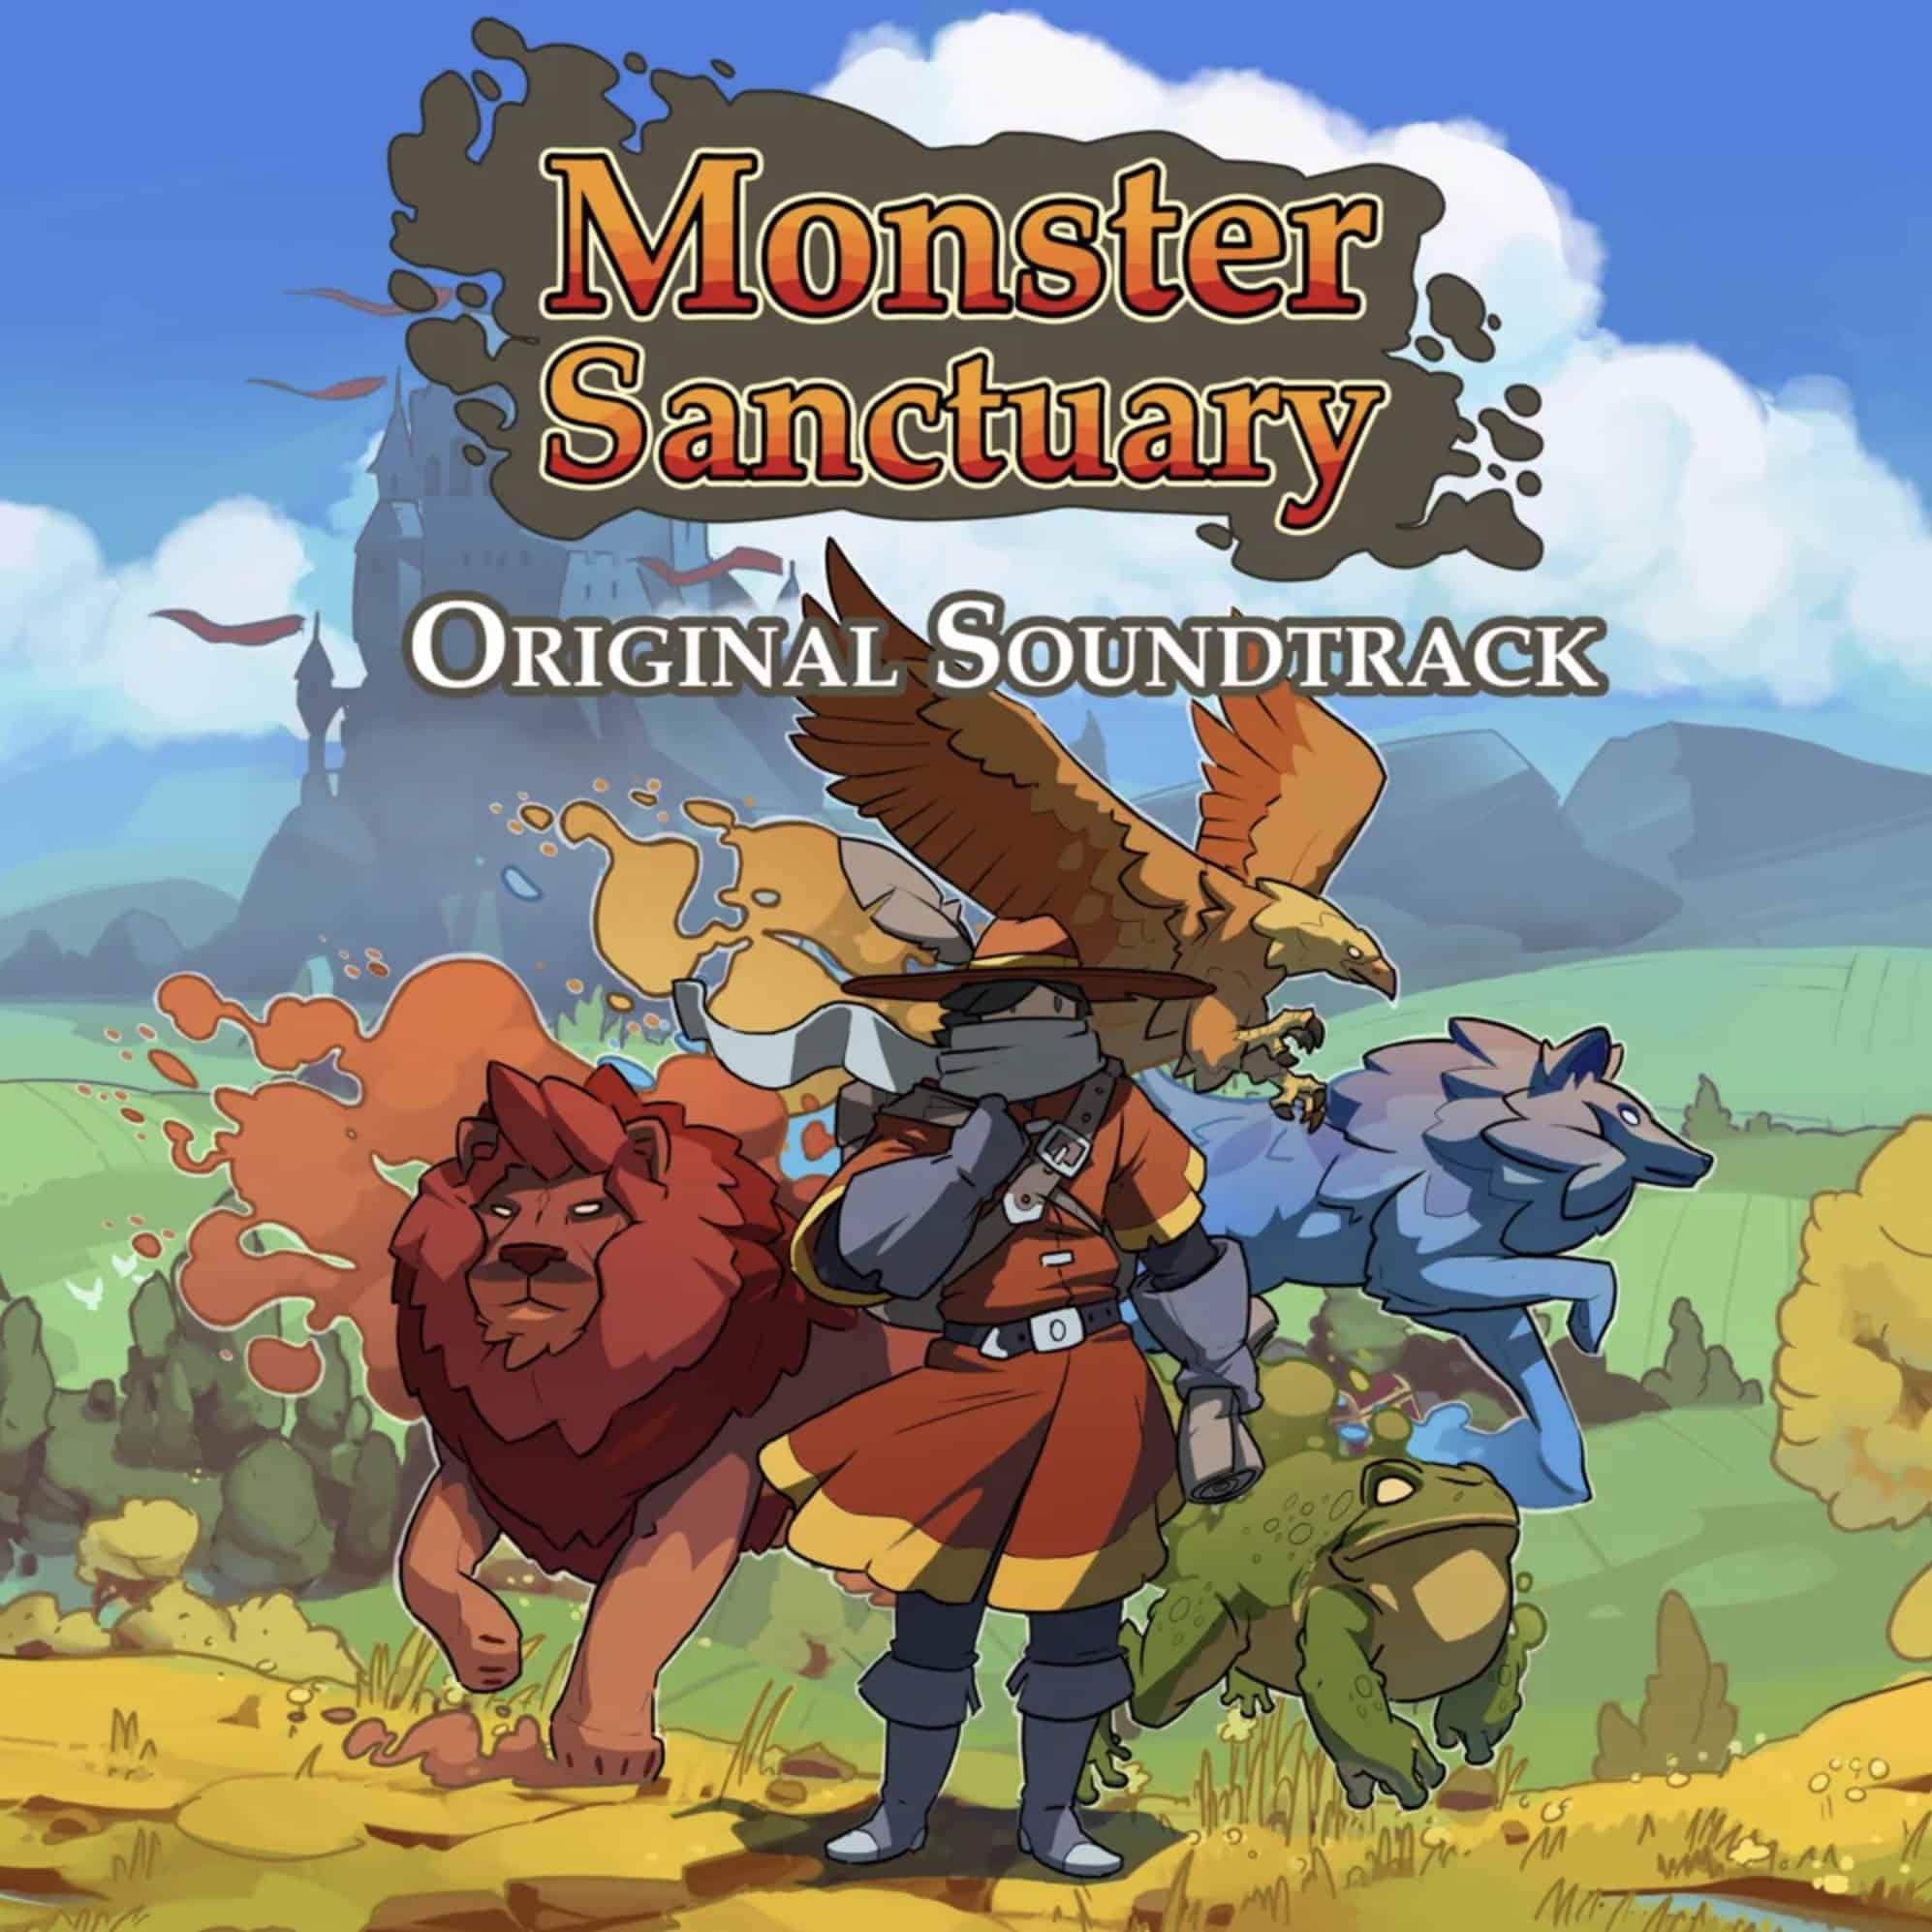 Monster Sanctuary Soundtrack Released